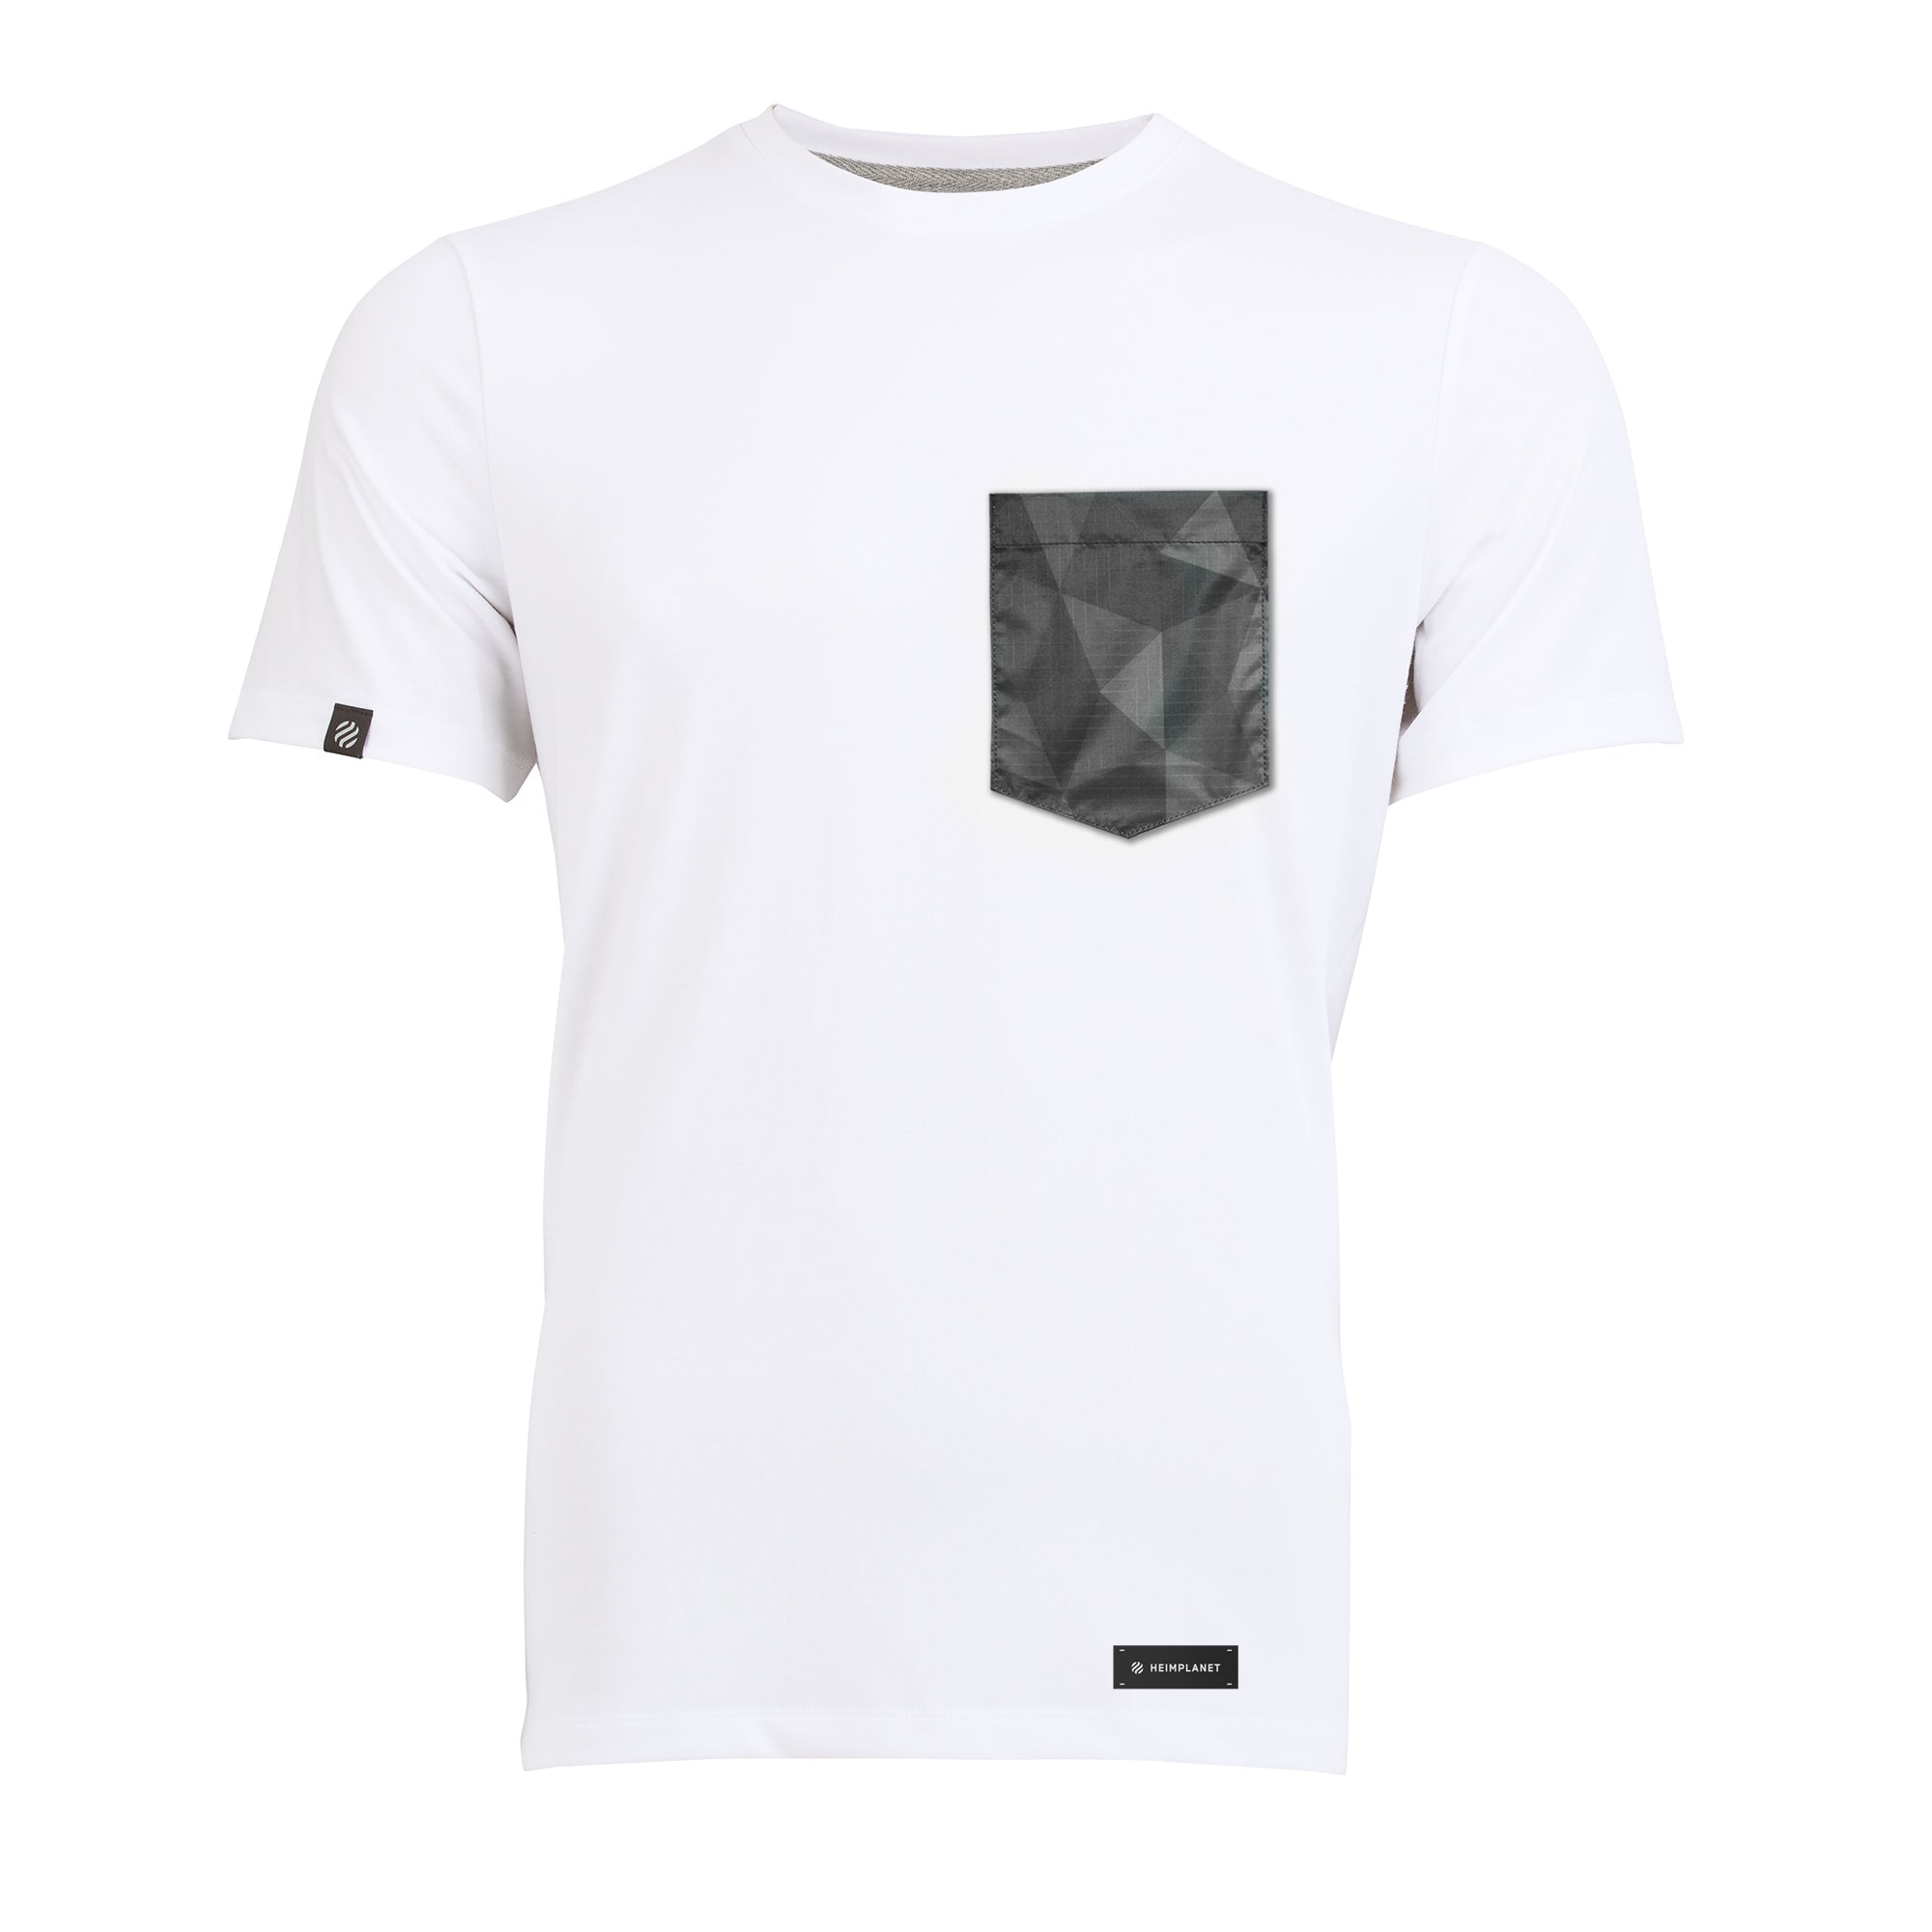 COOLEVER T-Shirt black Cairo Camo Pocket, white